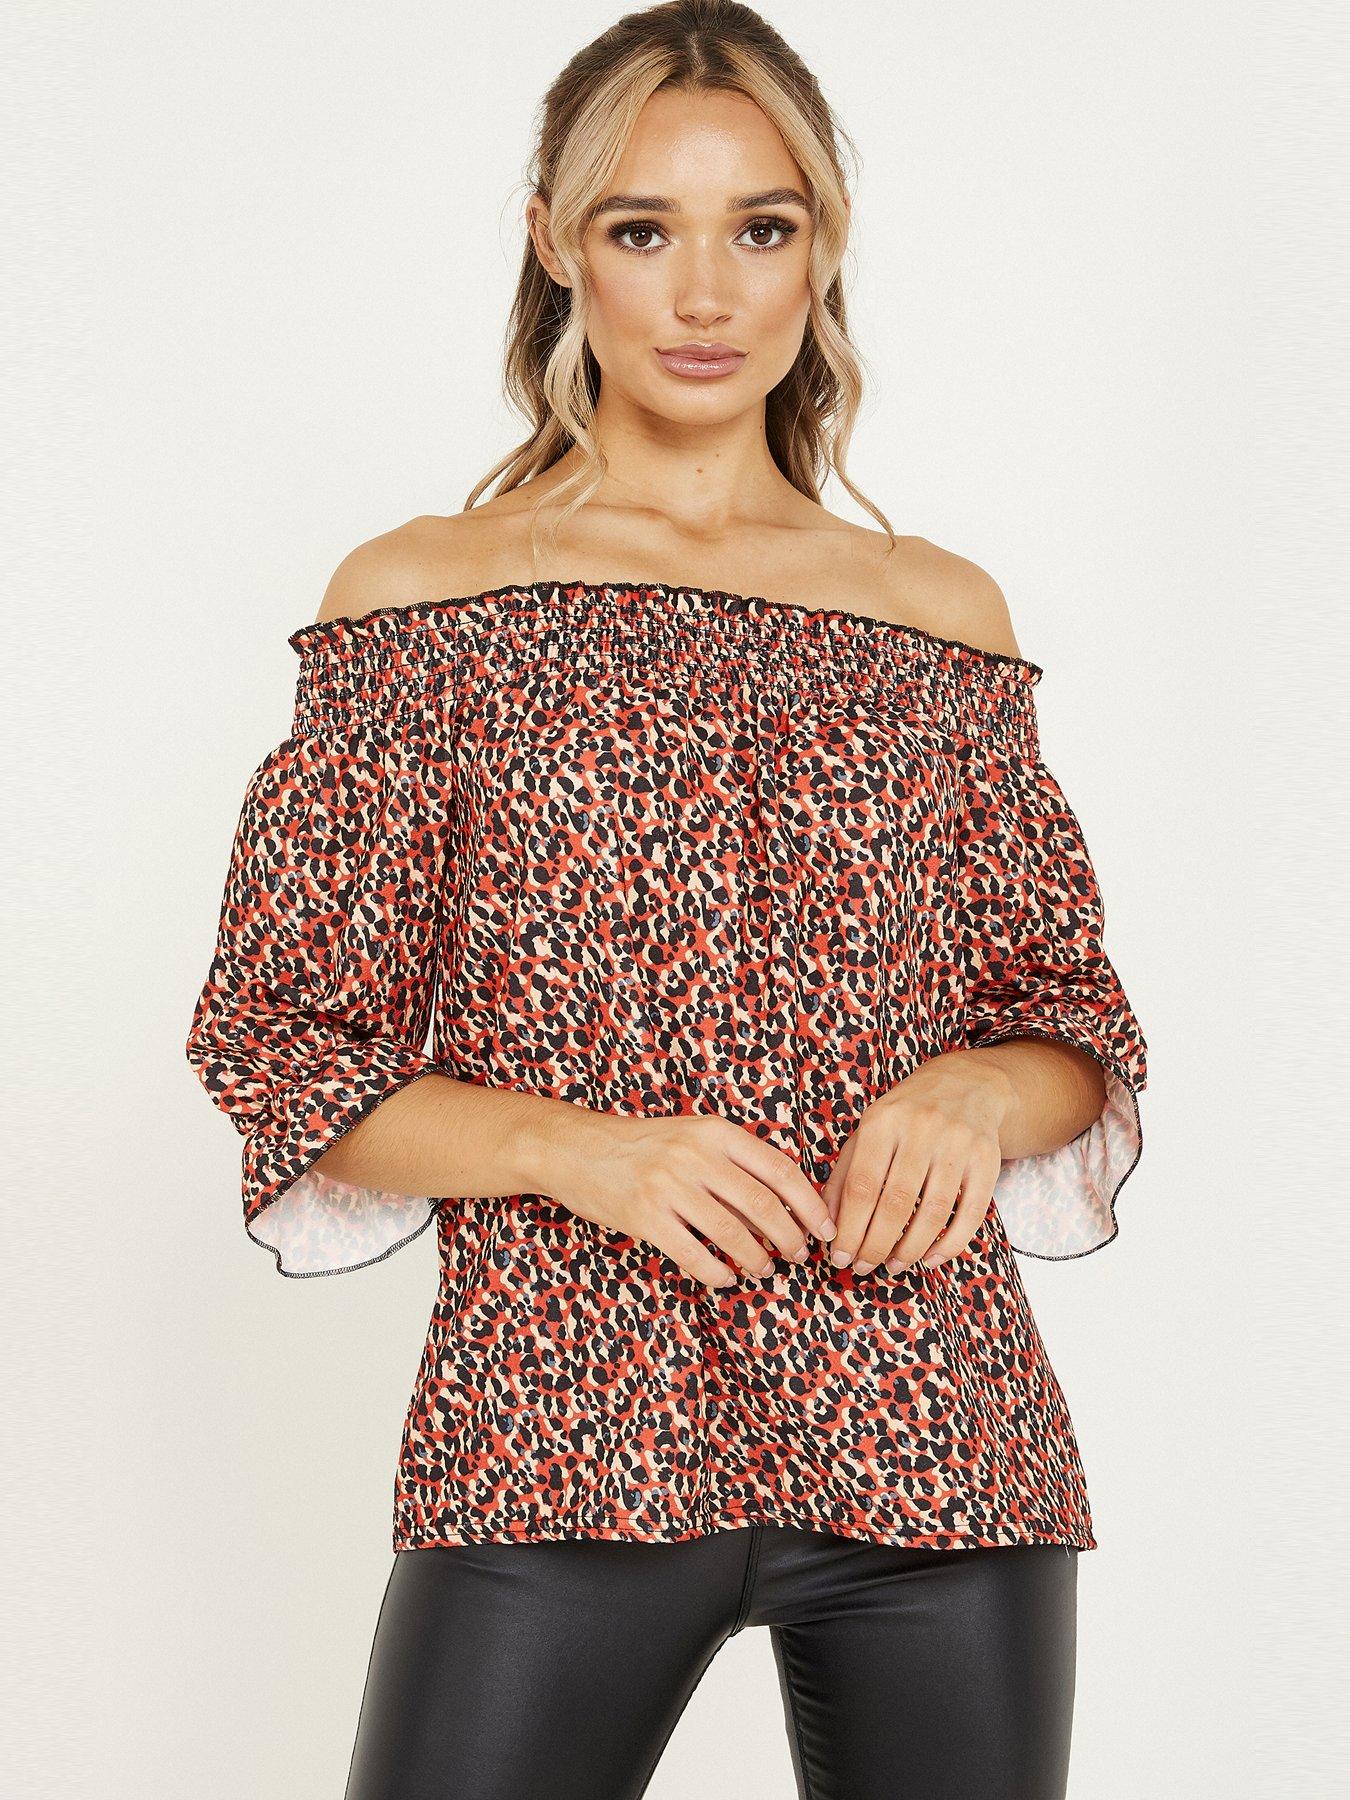 Blouses & shirts Leopard Print Bardot Top